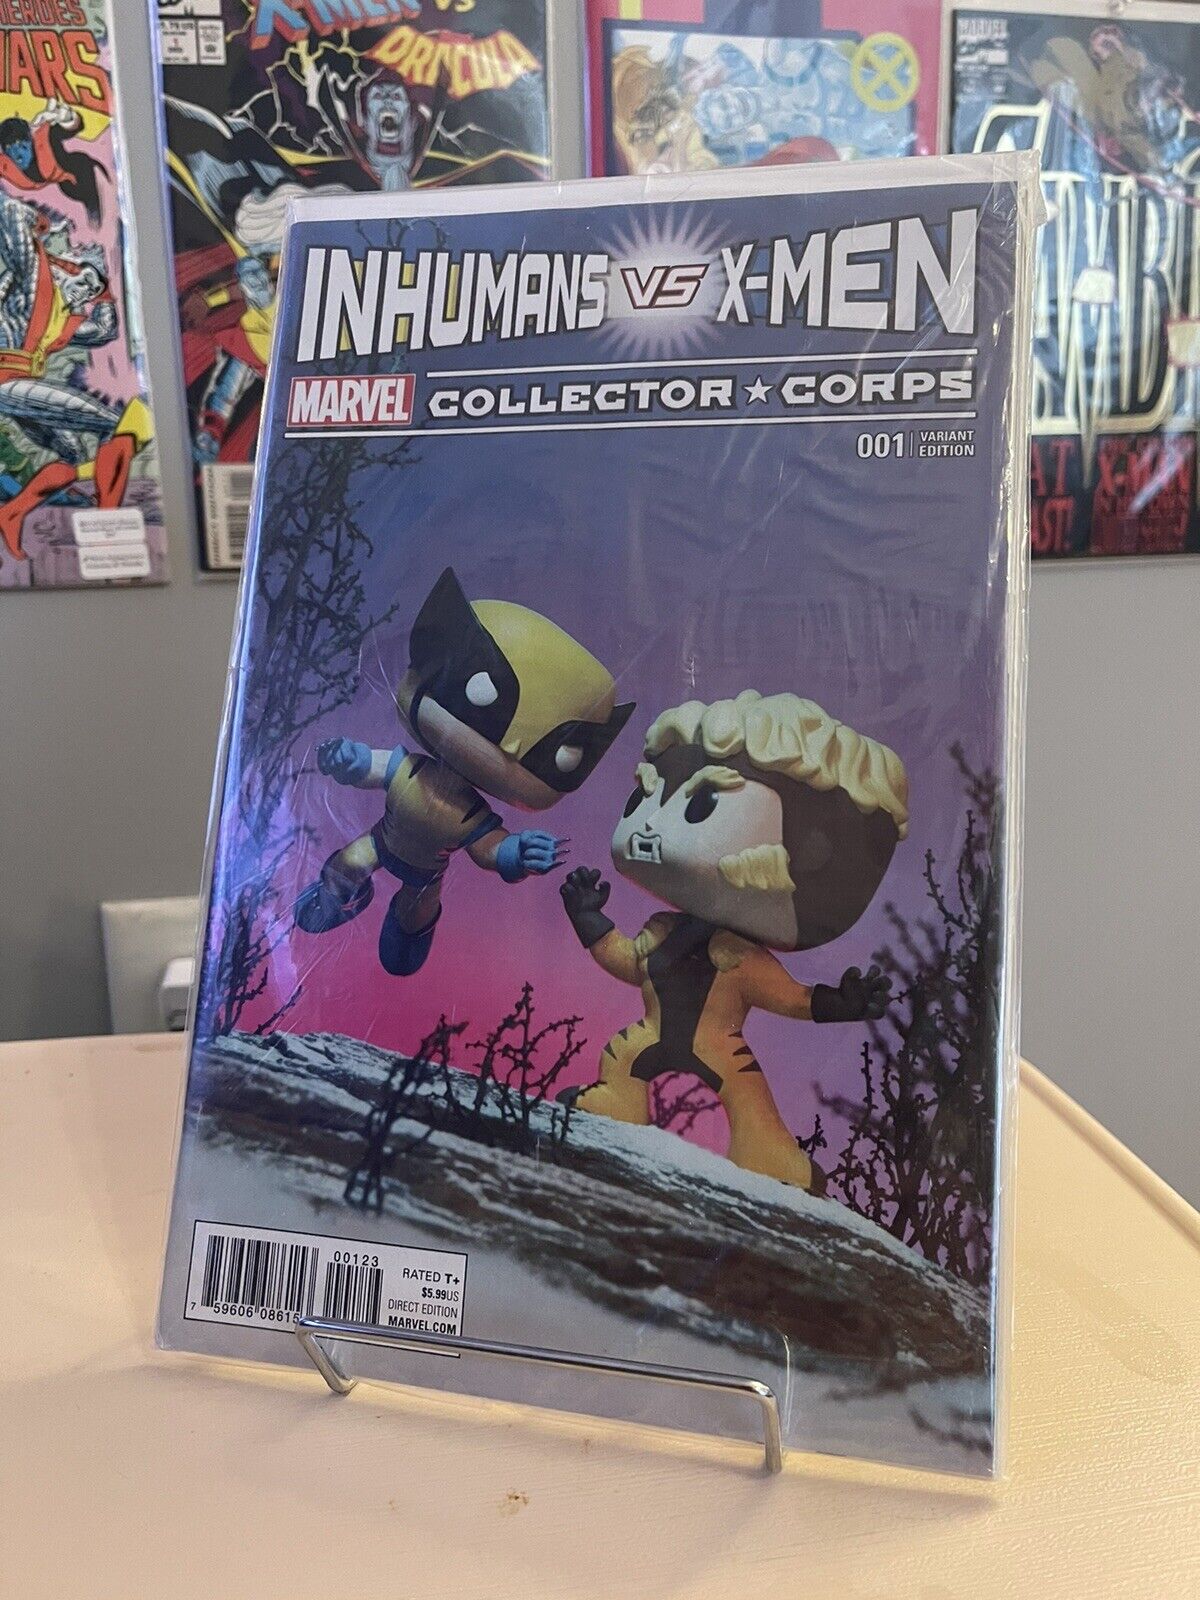 Inhumans vs X-Men #1 Collector Corps Variant (Funko Pop Cover)